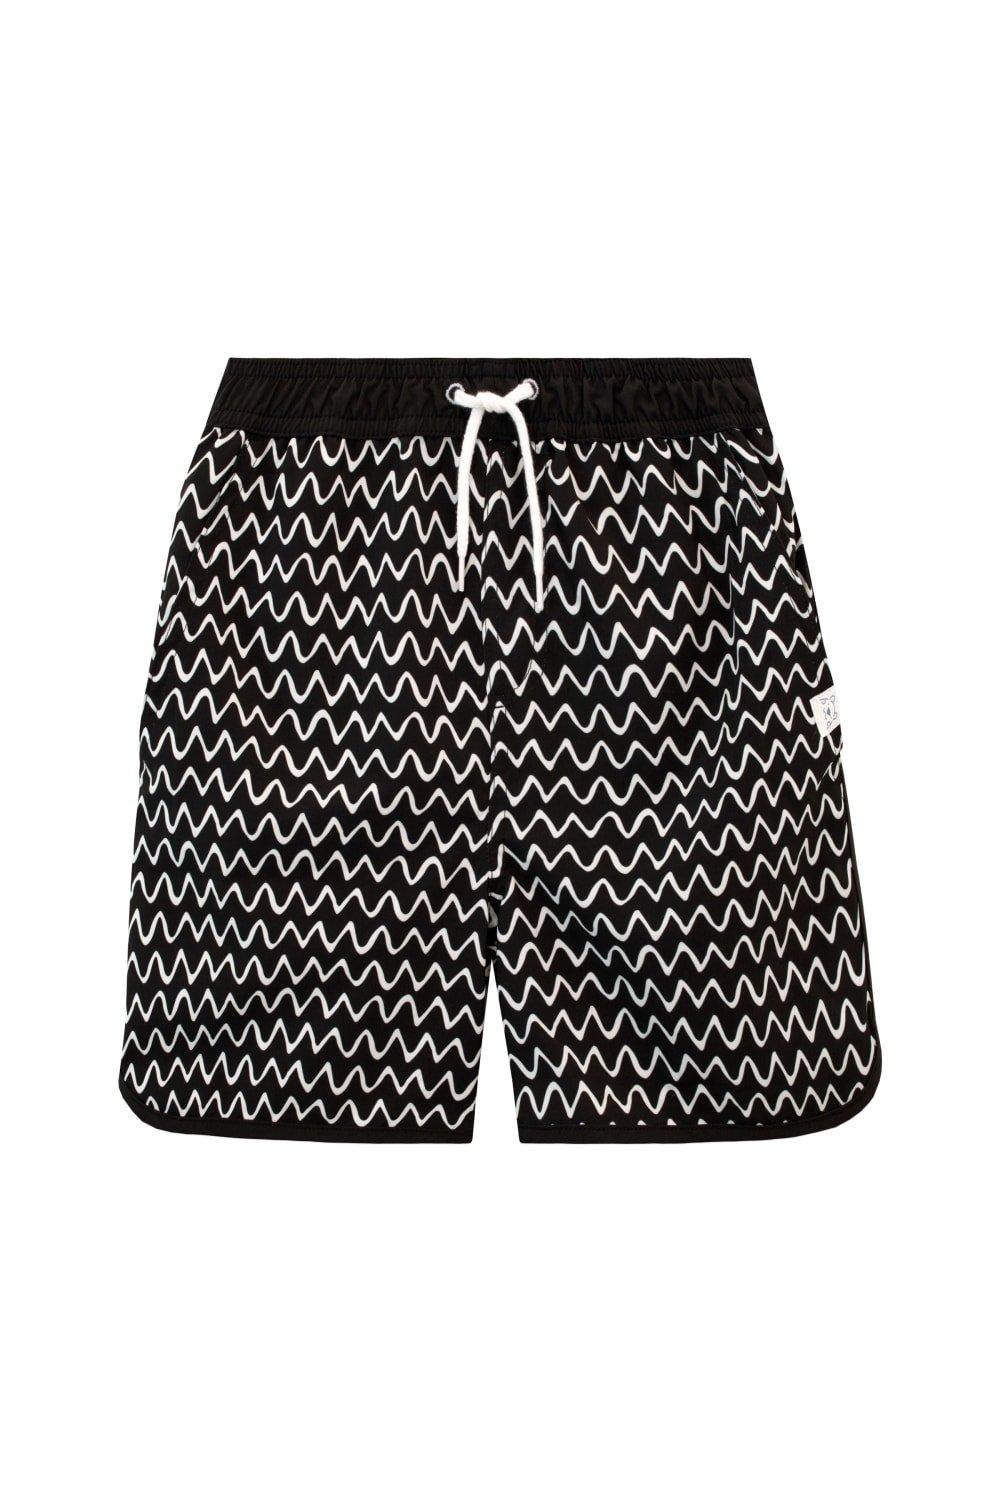 Make Waves Zig Zag Pattern Swim Shorts With Waist Pockets